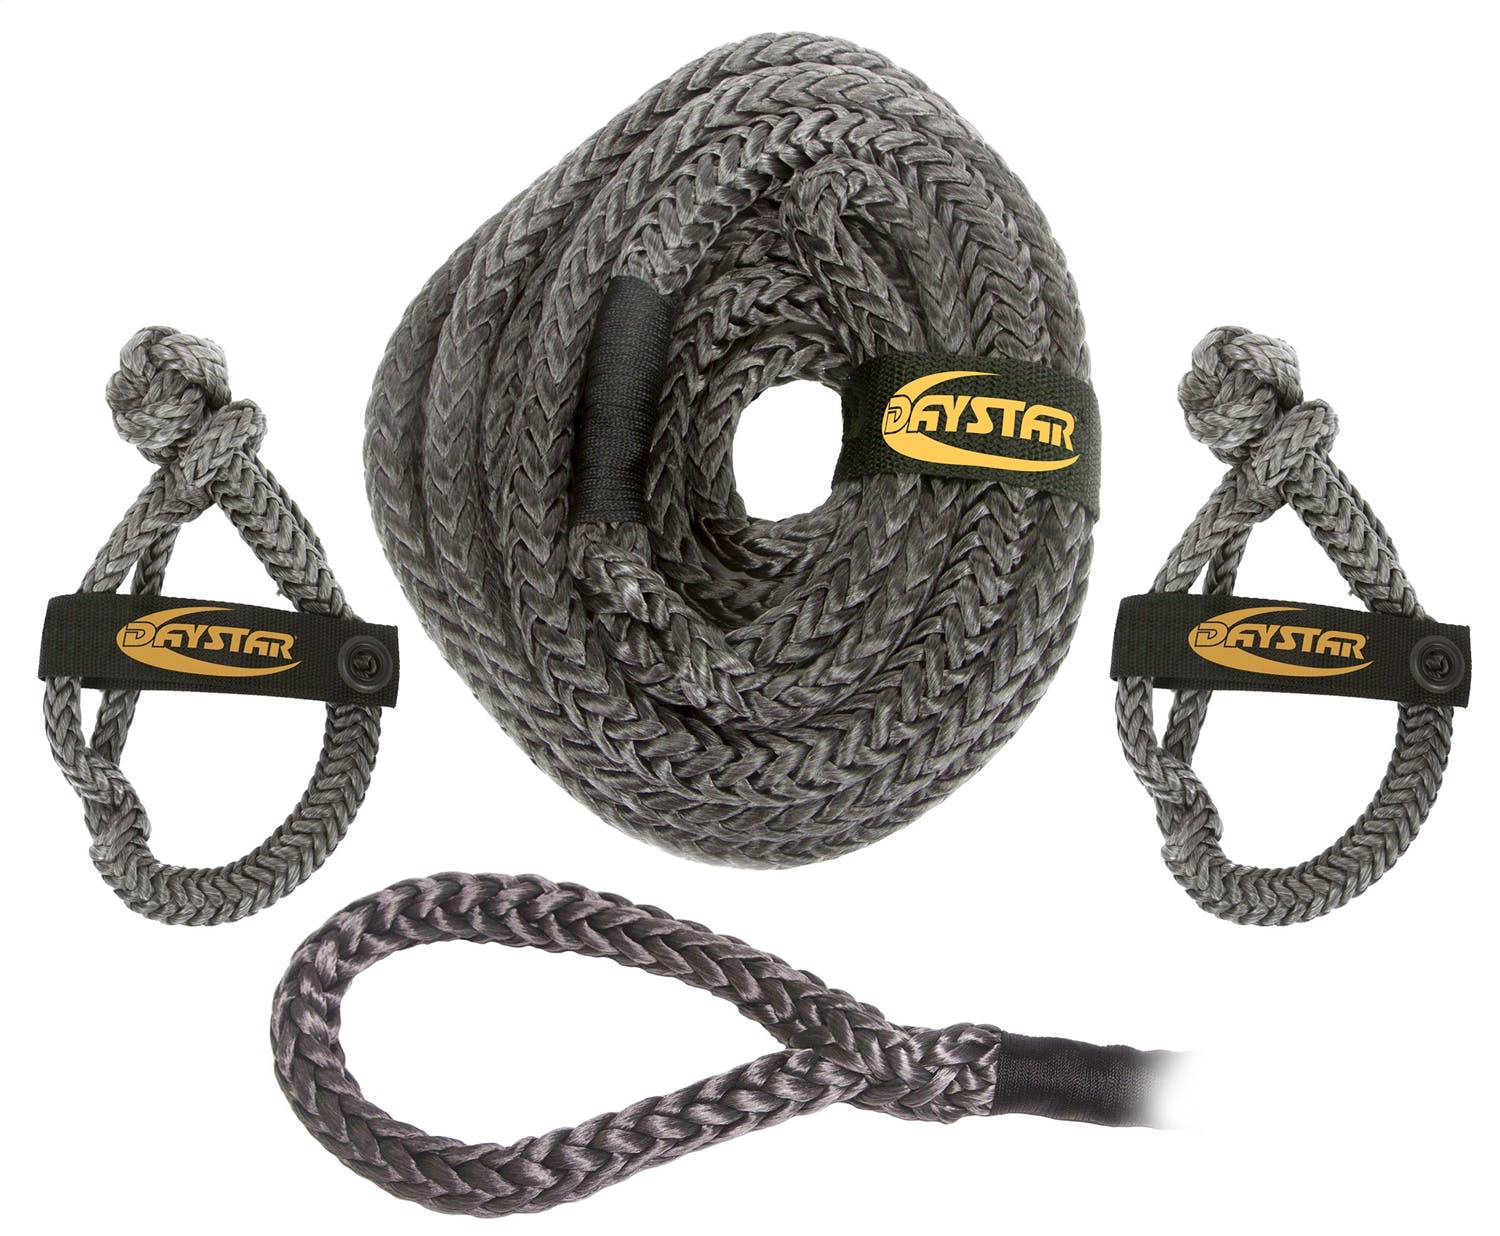 Daystar KU10305BK 7/8 inch X 25 Black Rope, Loop Ends w/(2) 3/8 inch Soft Shackles/Nylon Recovery Bag